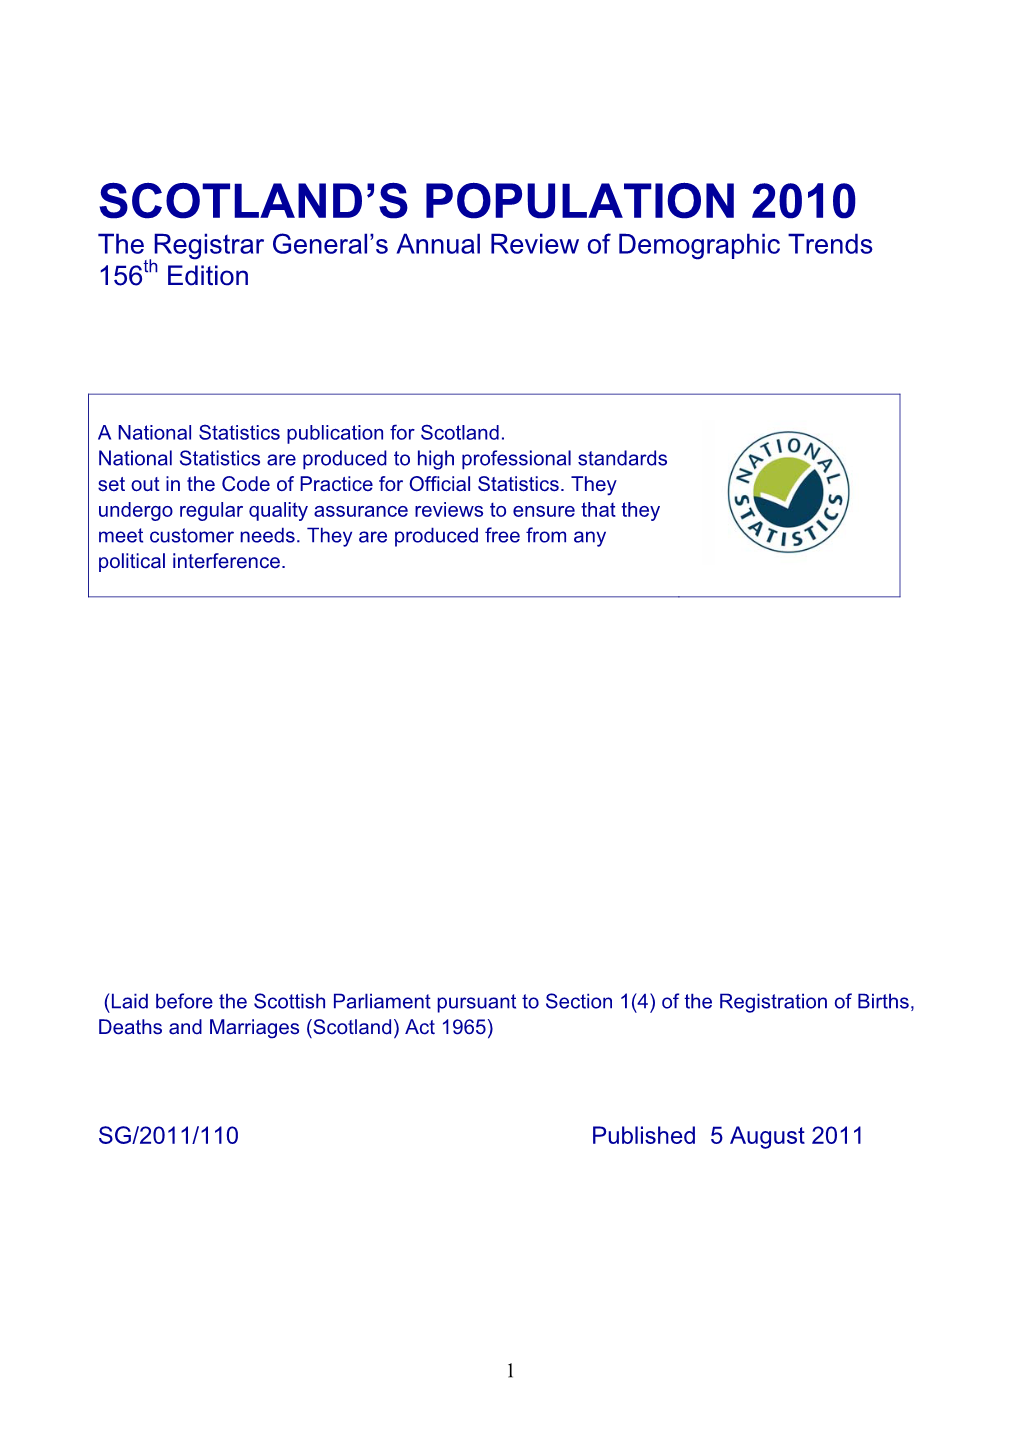 Scotland's Population 2010 -The Registrar General's Annual Review